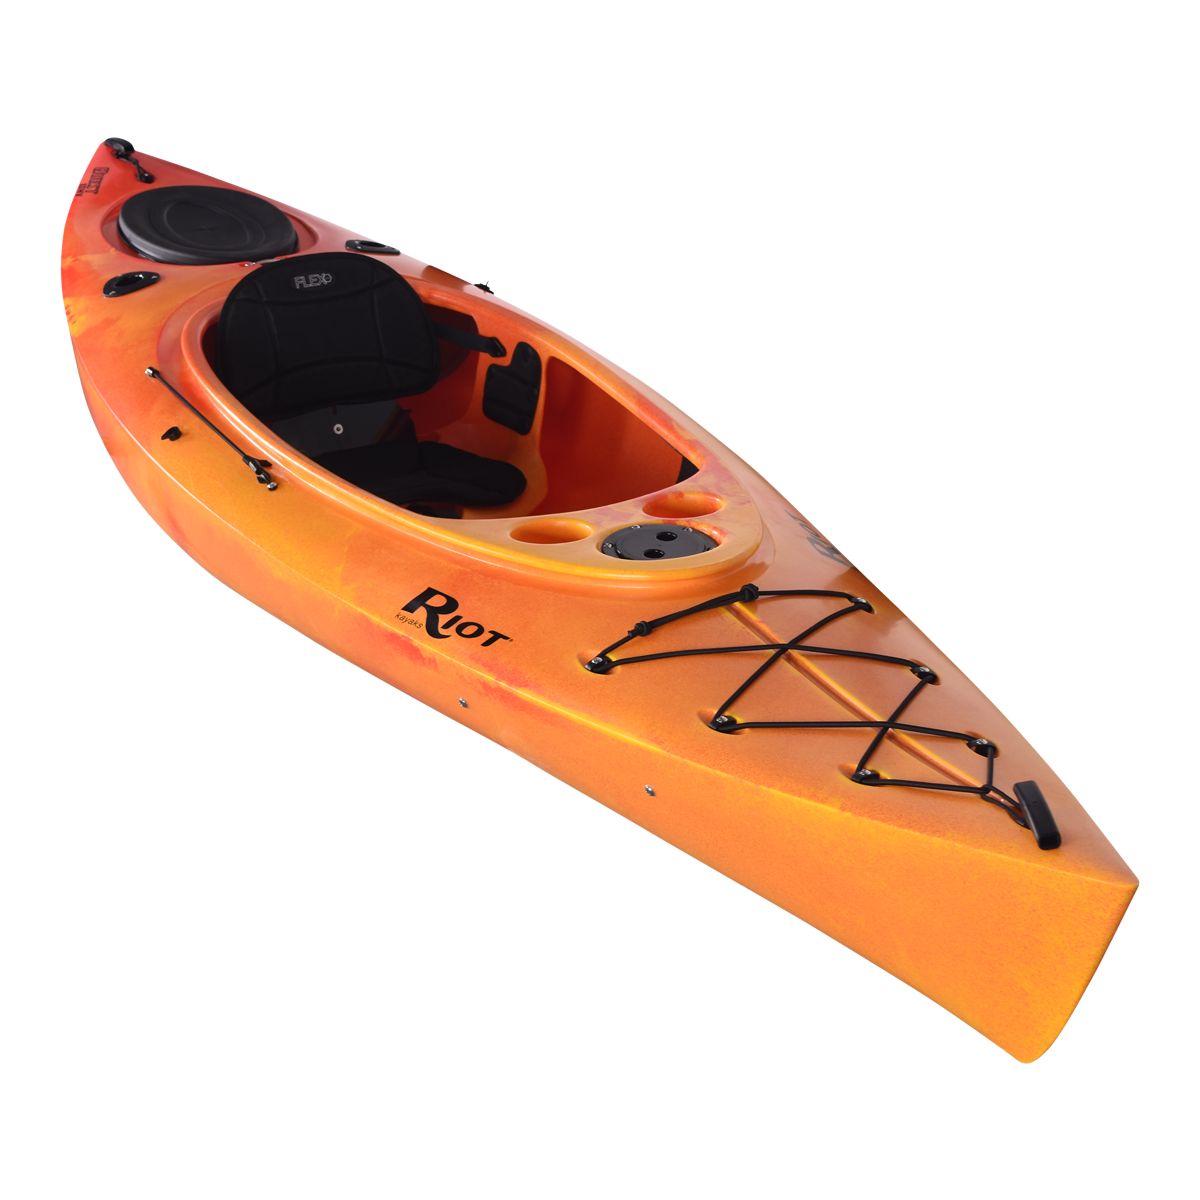 Buy riot kayaks Online in INDIA at Low Prices at desertcart